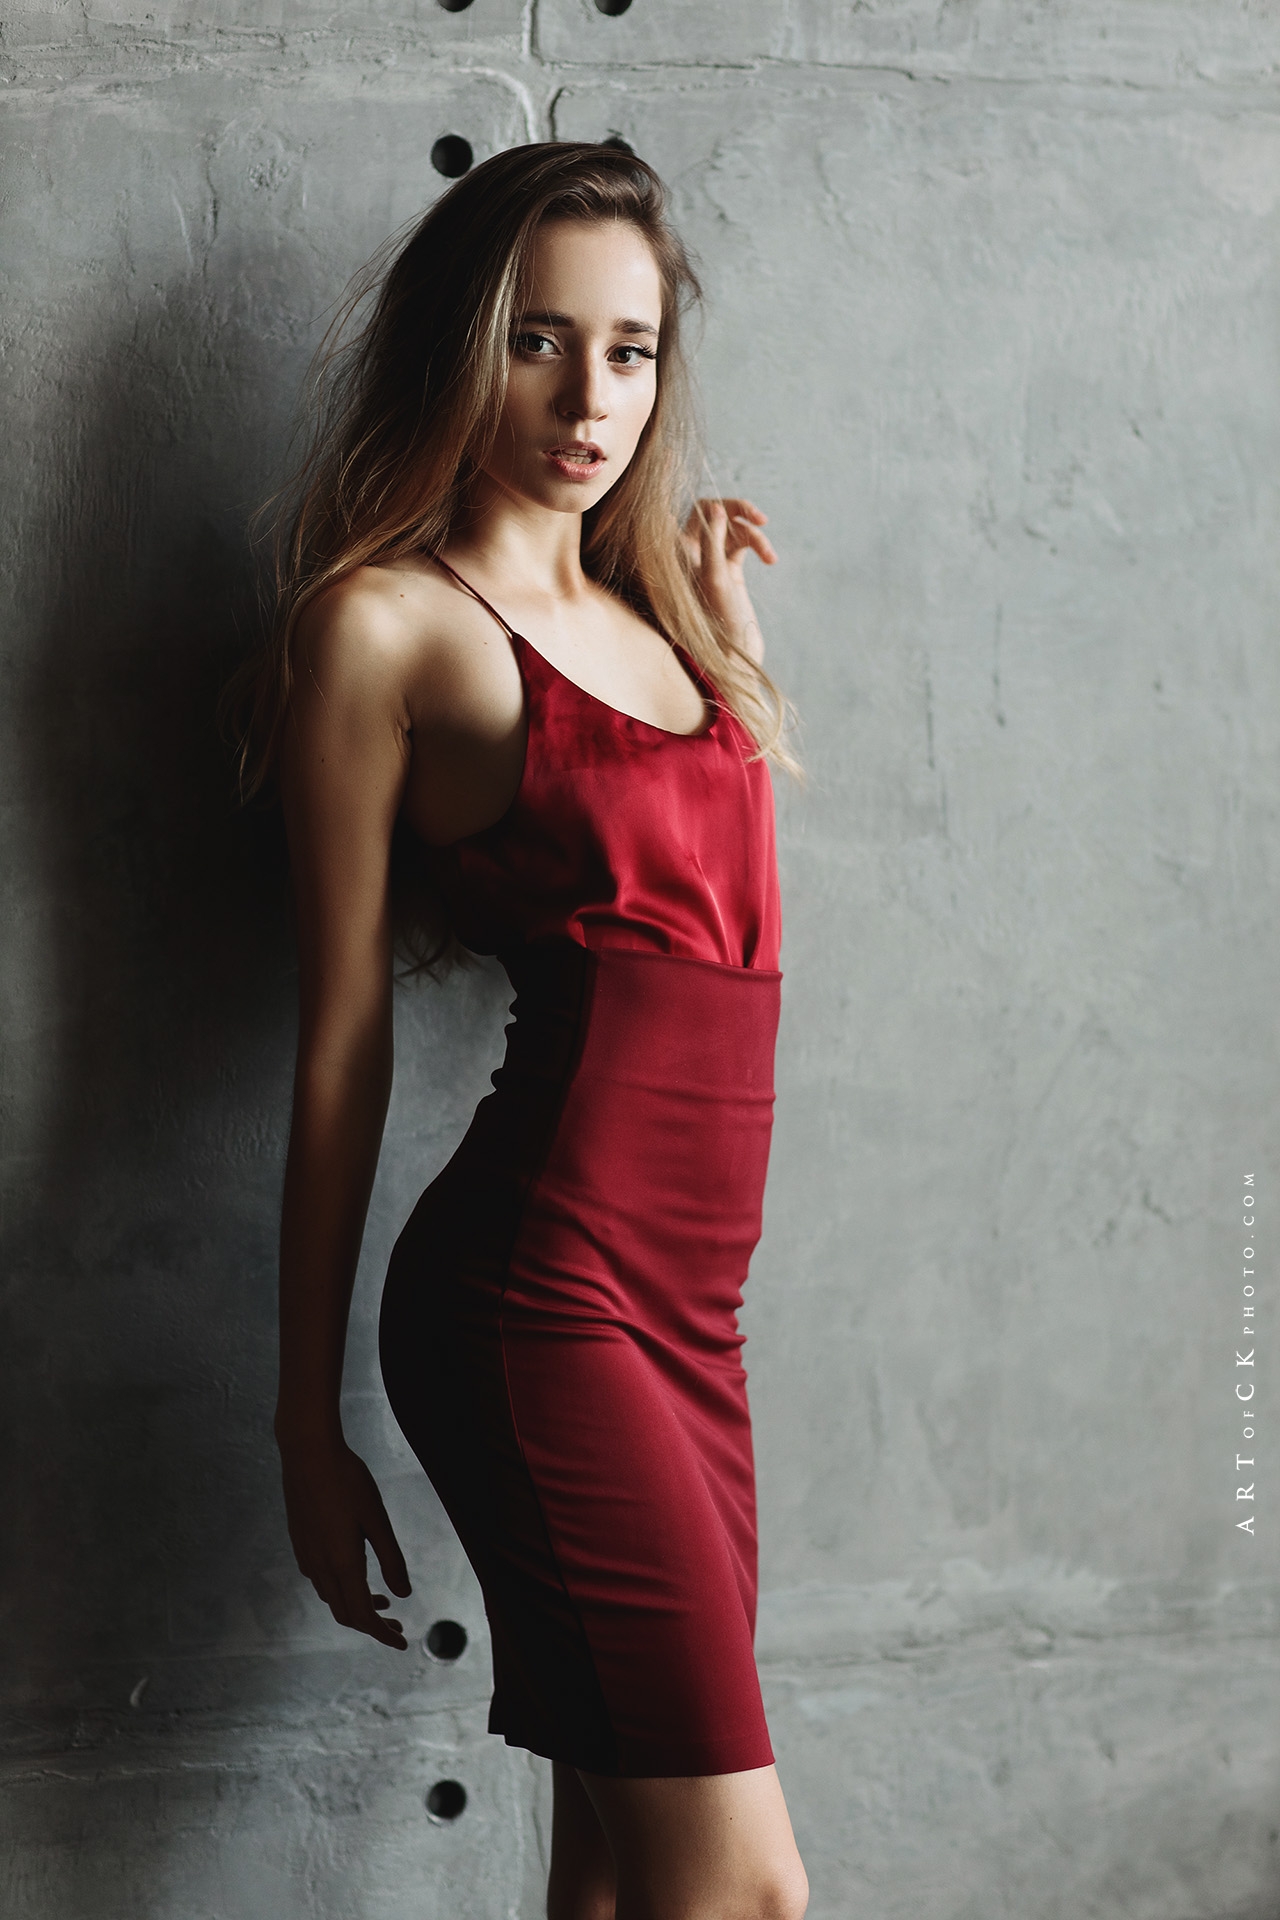 Stepan Kvardakov Women Angelina Tsys Brunette Dress Red Clothing Wall Slim Body 1280x1920